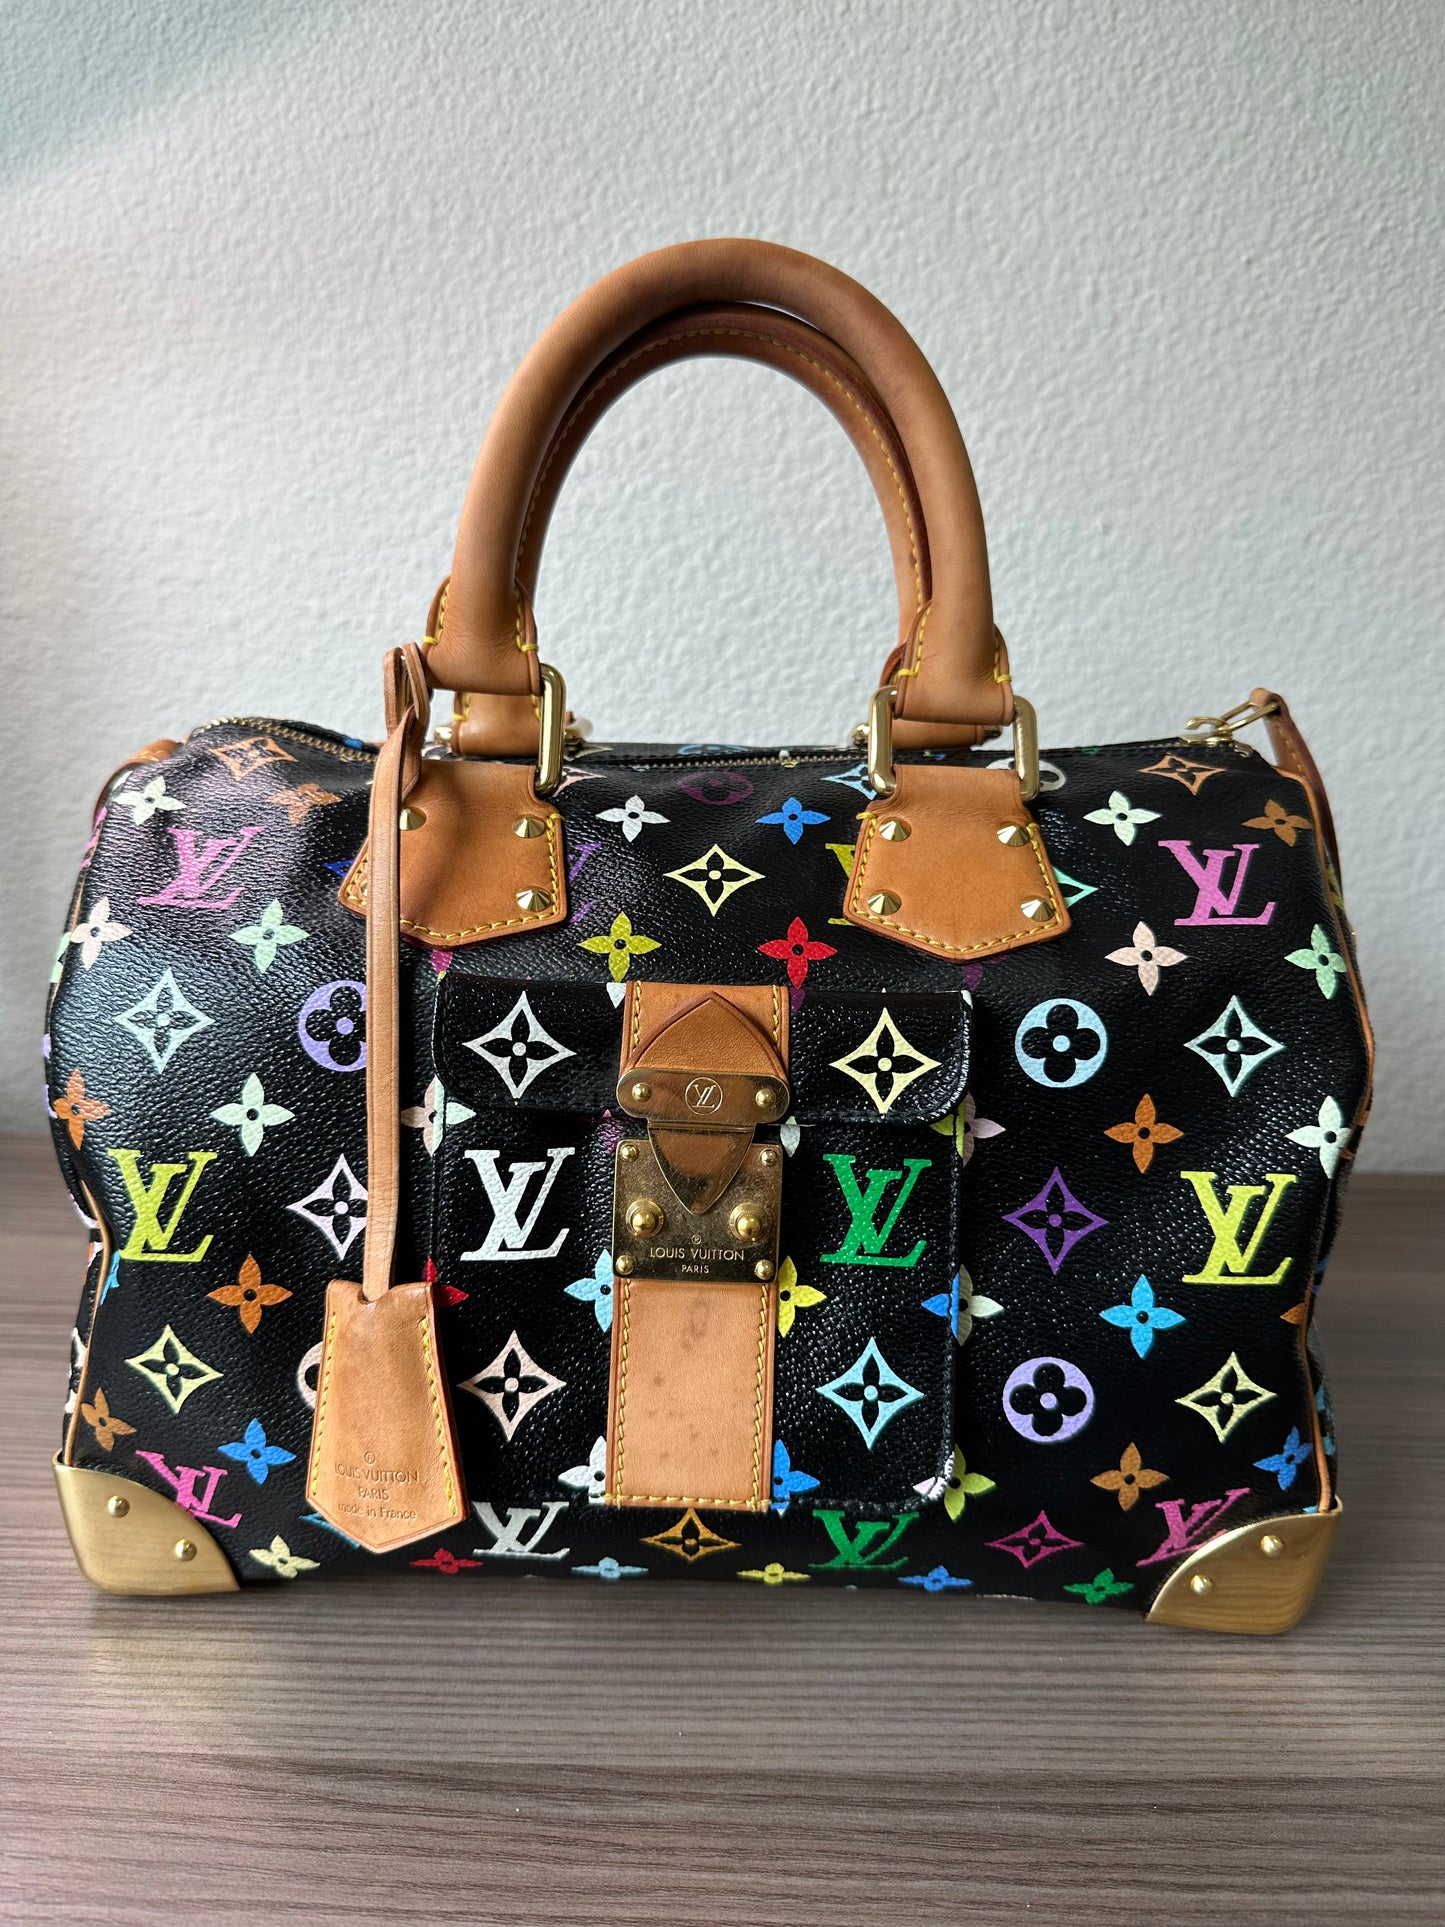 Pre-owned Authentic Louis Vuitton Speedy 30 Monogram Multicolor Black Handbag